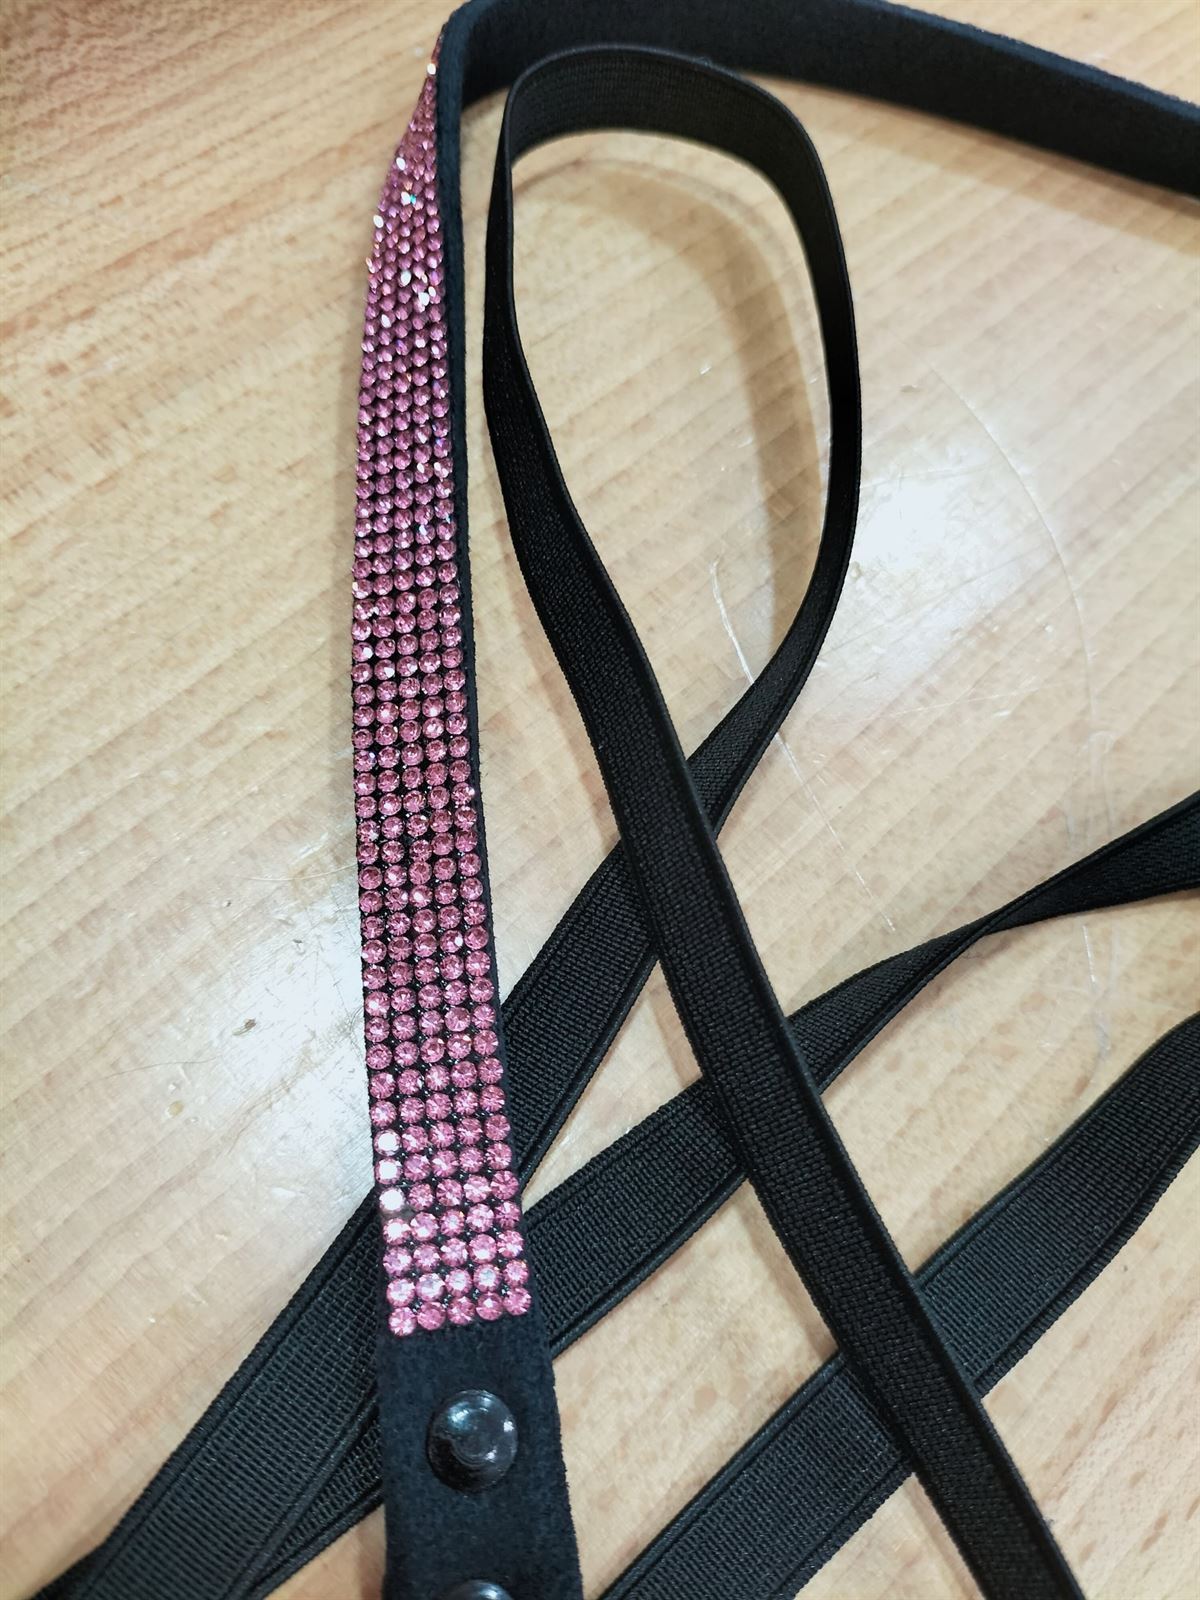 Adorno silla CASTECUS cinta decorativa trasera cristales rosas - Imagen 3